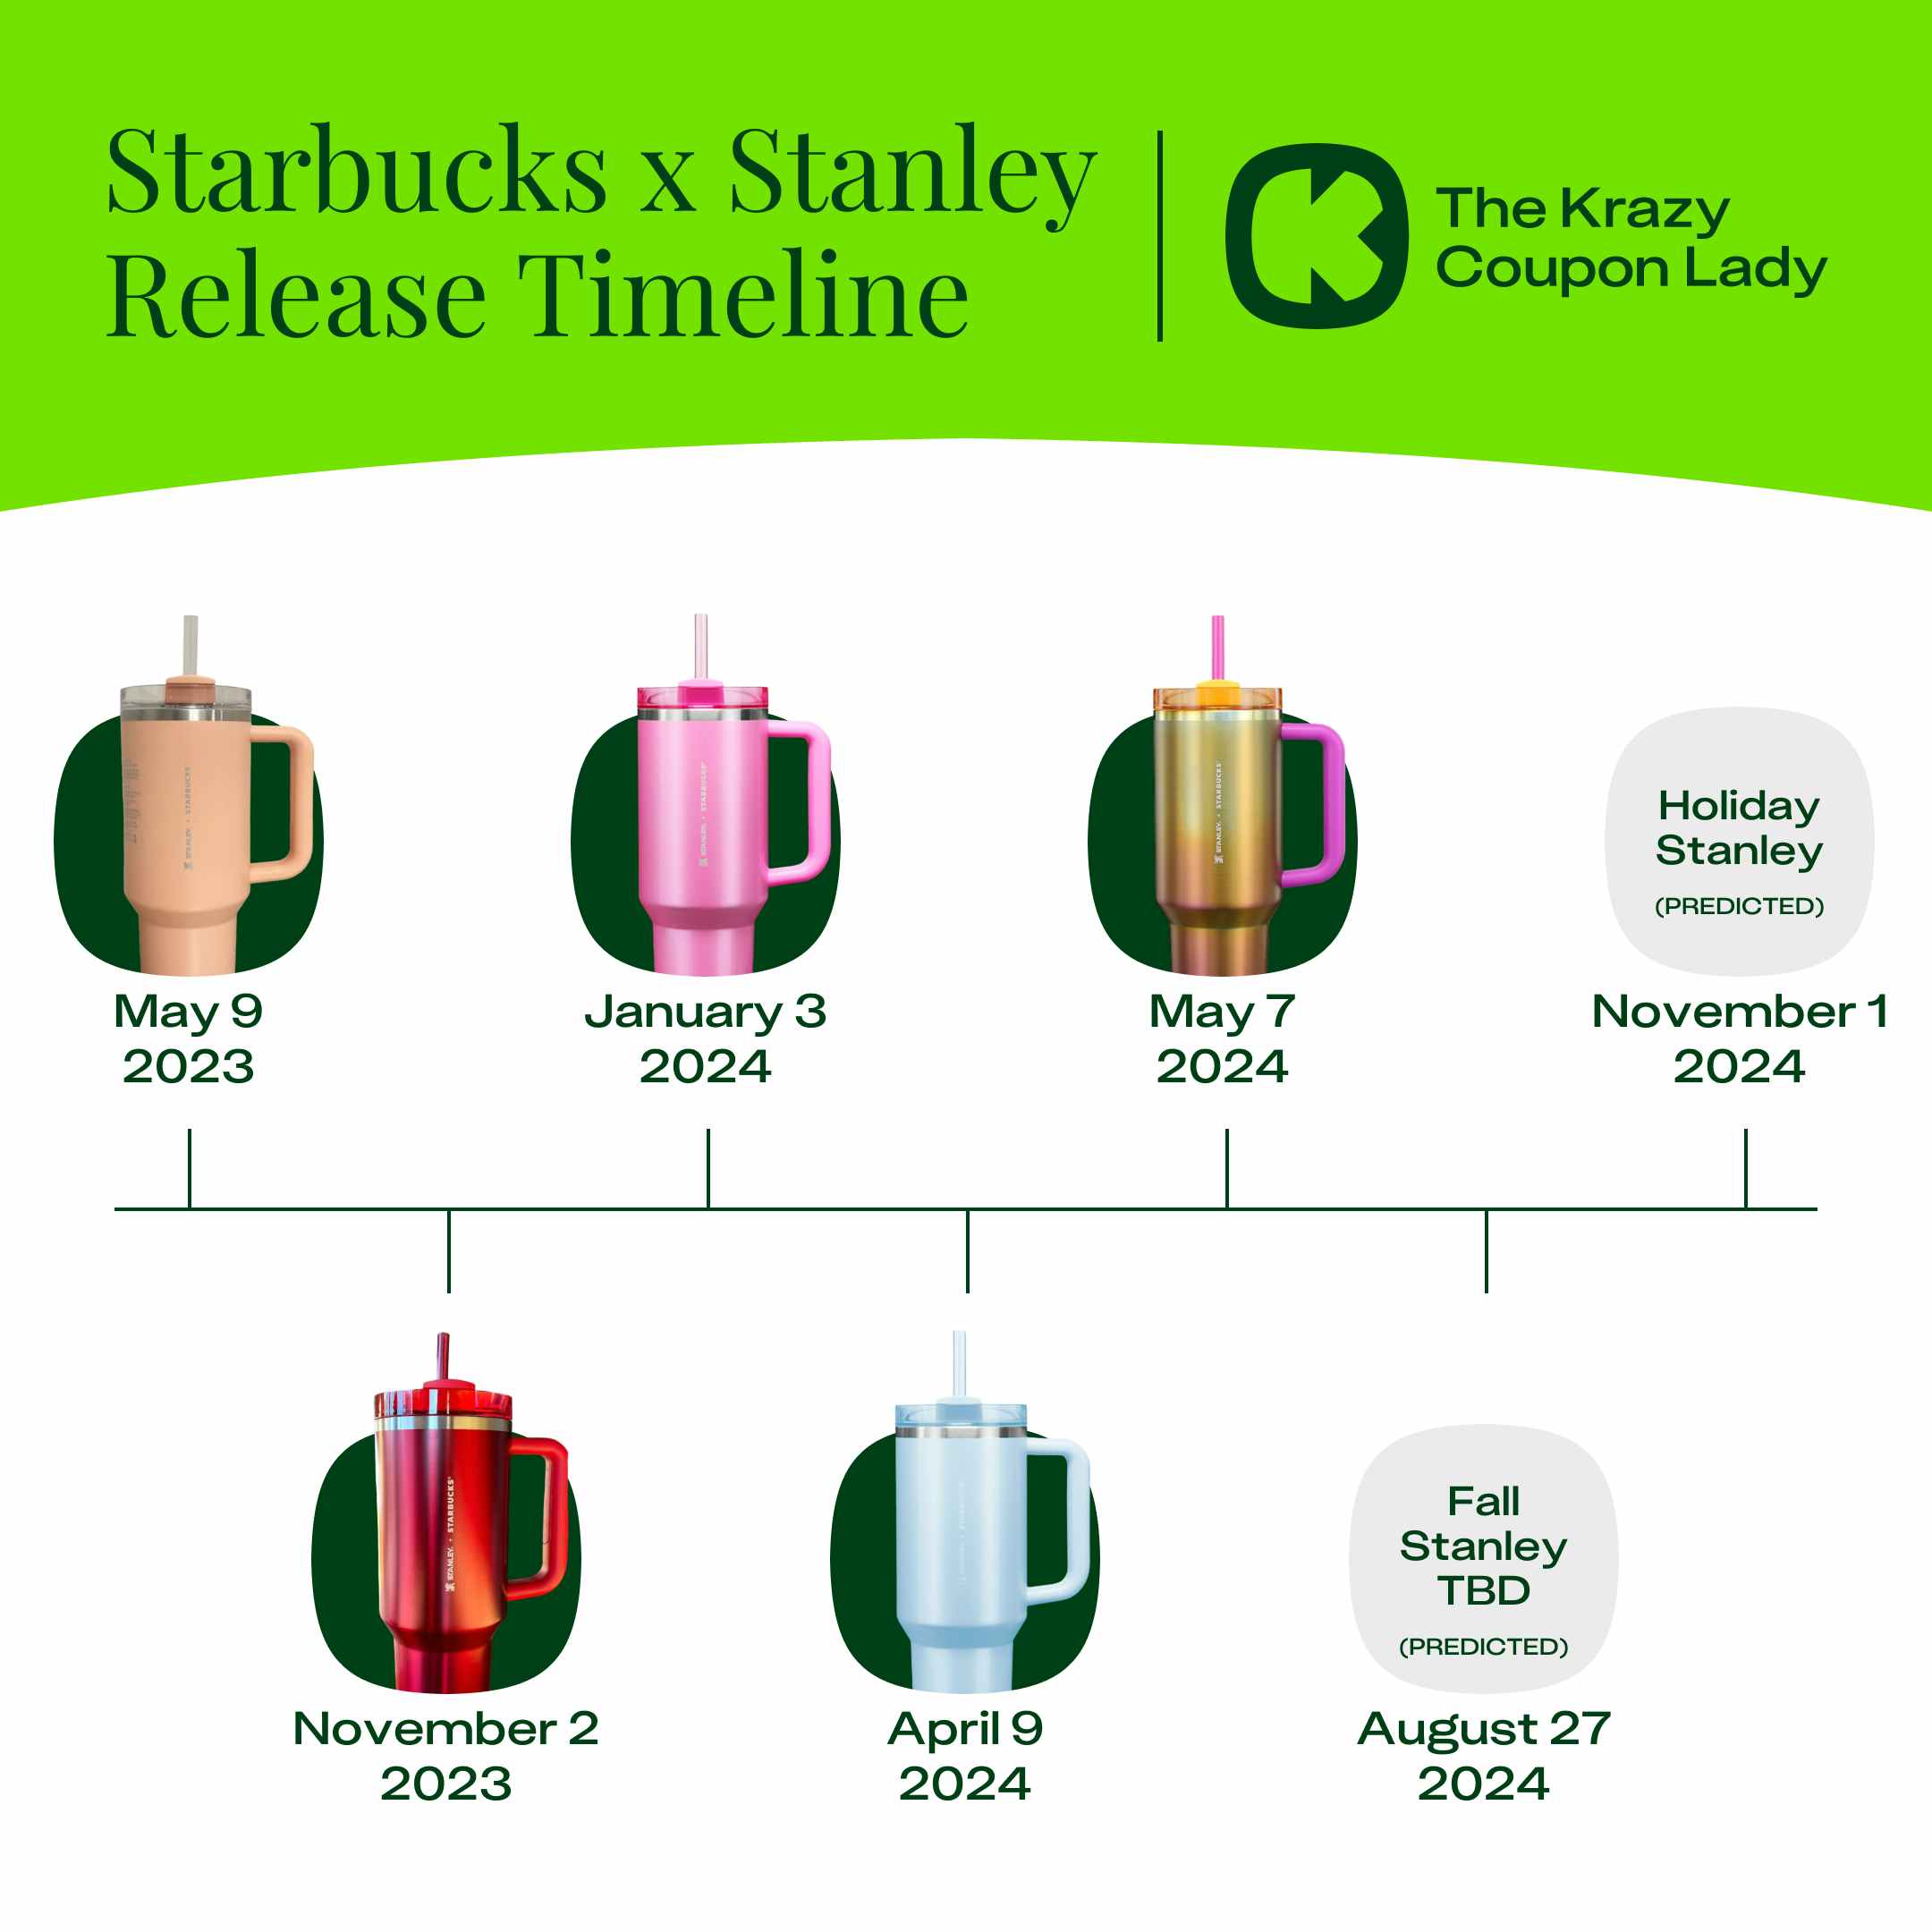 Starbucks x Stanley Release Timeline